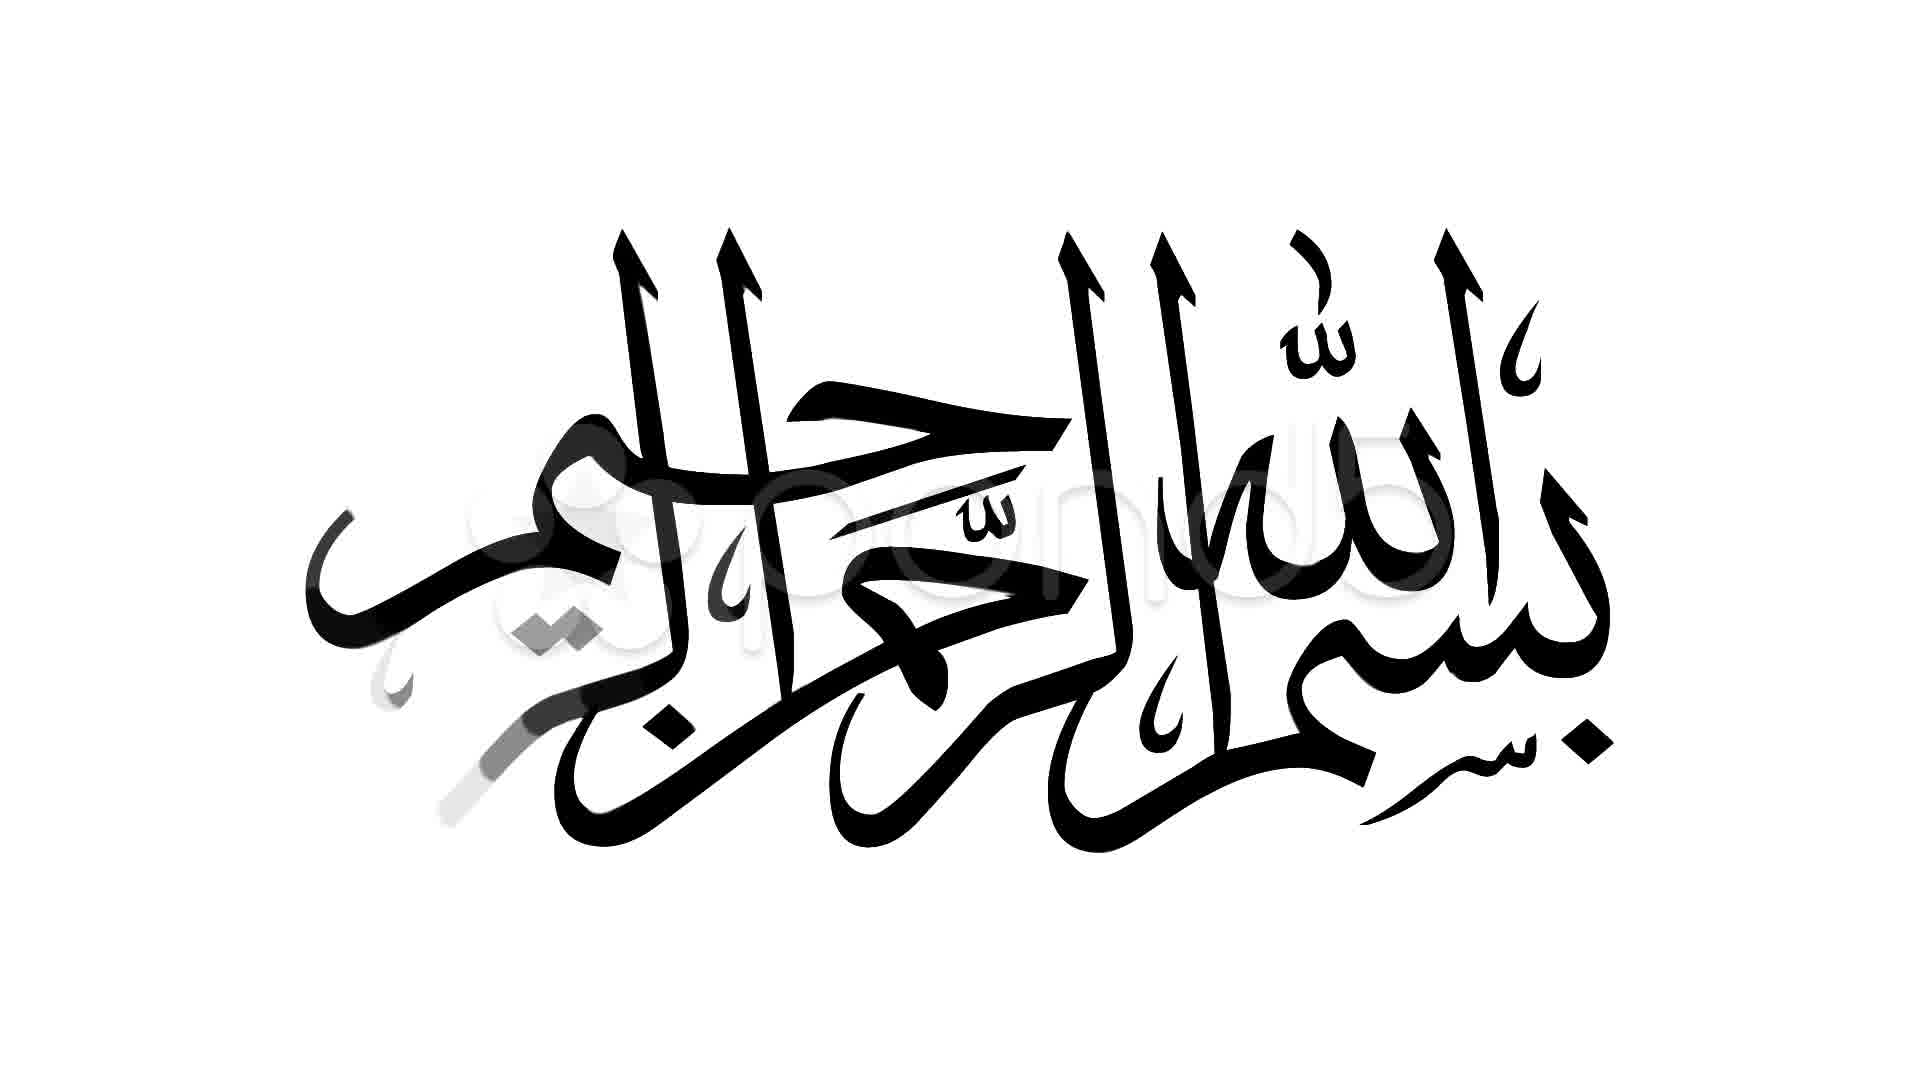 bismillahirrahmanirrahim in arabic text